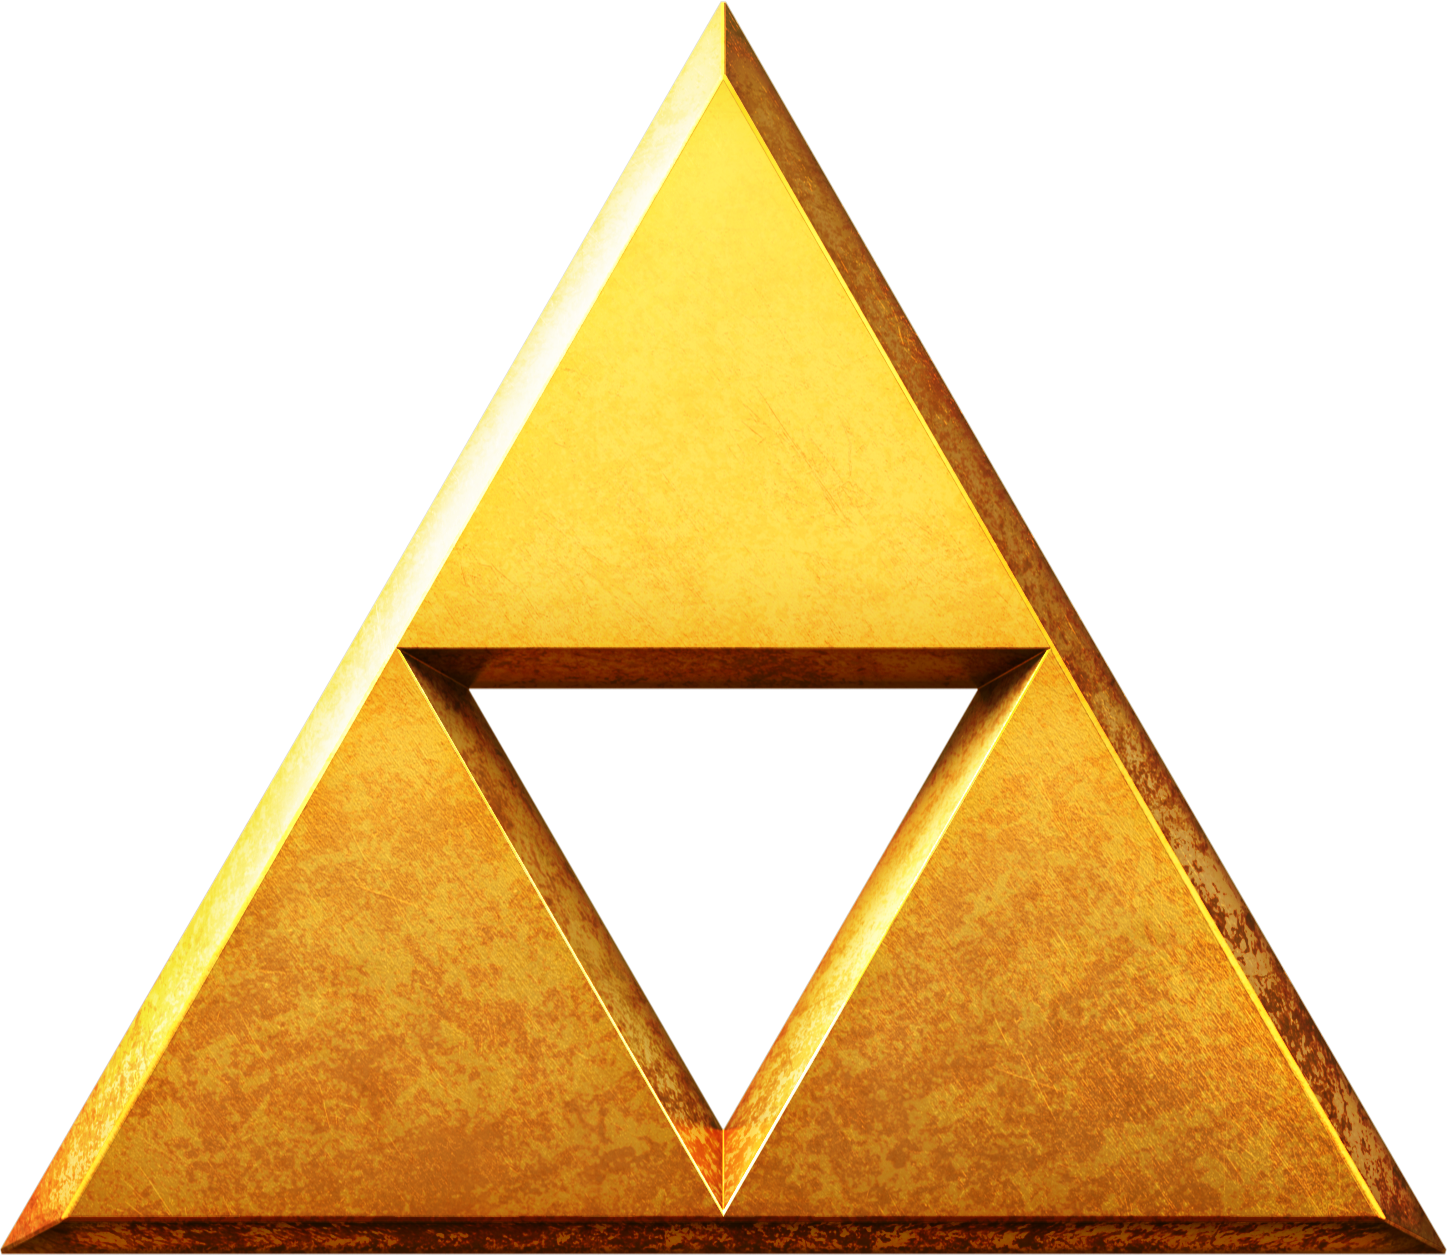 Communication Icon - Zelda Wiki